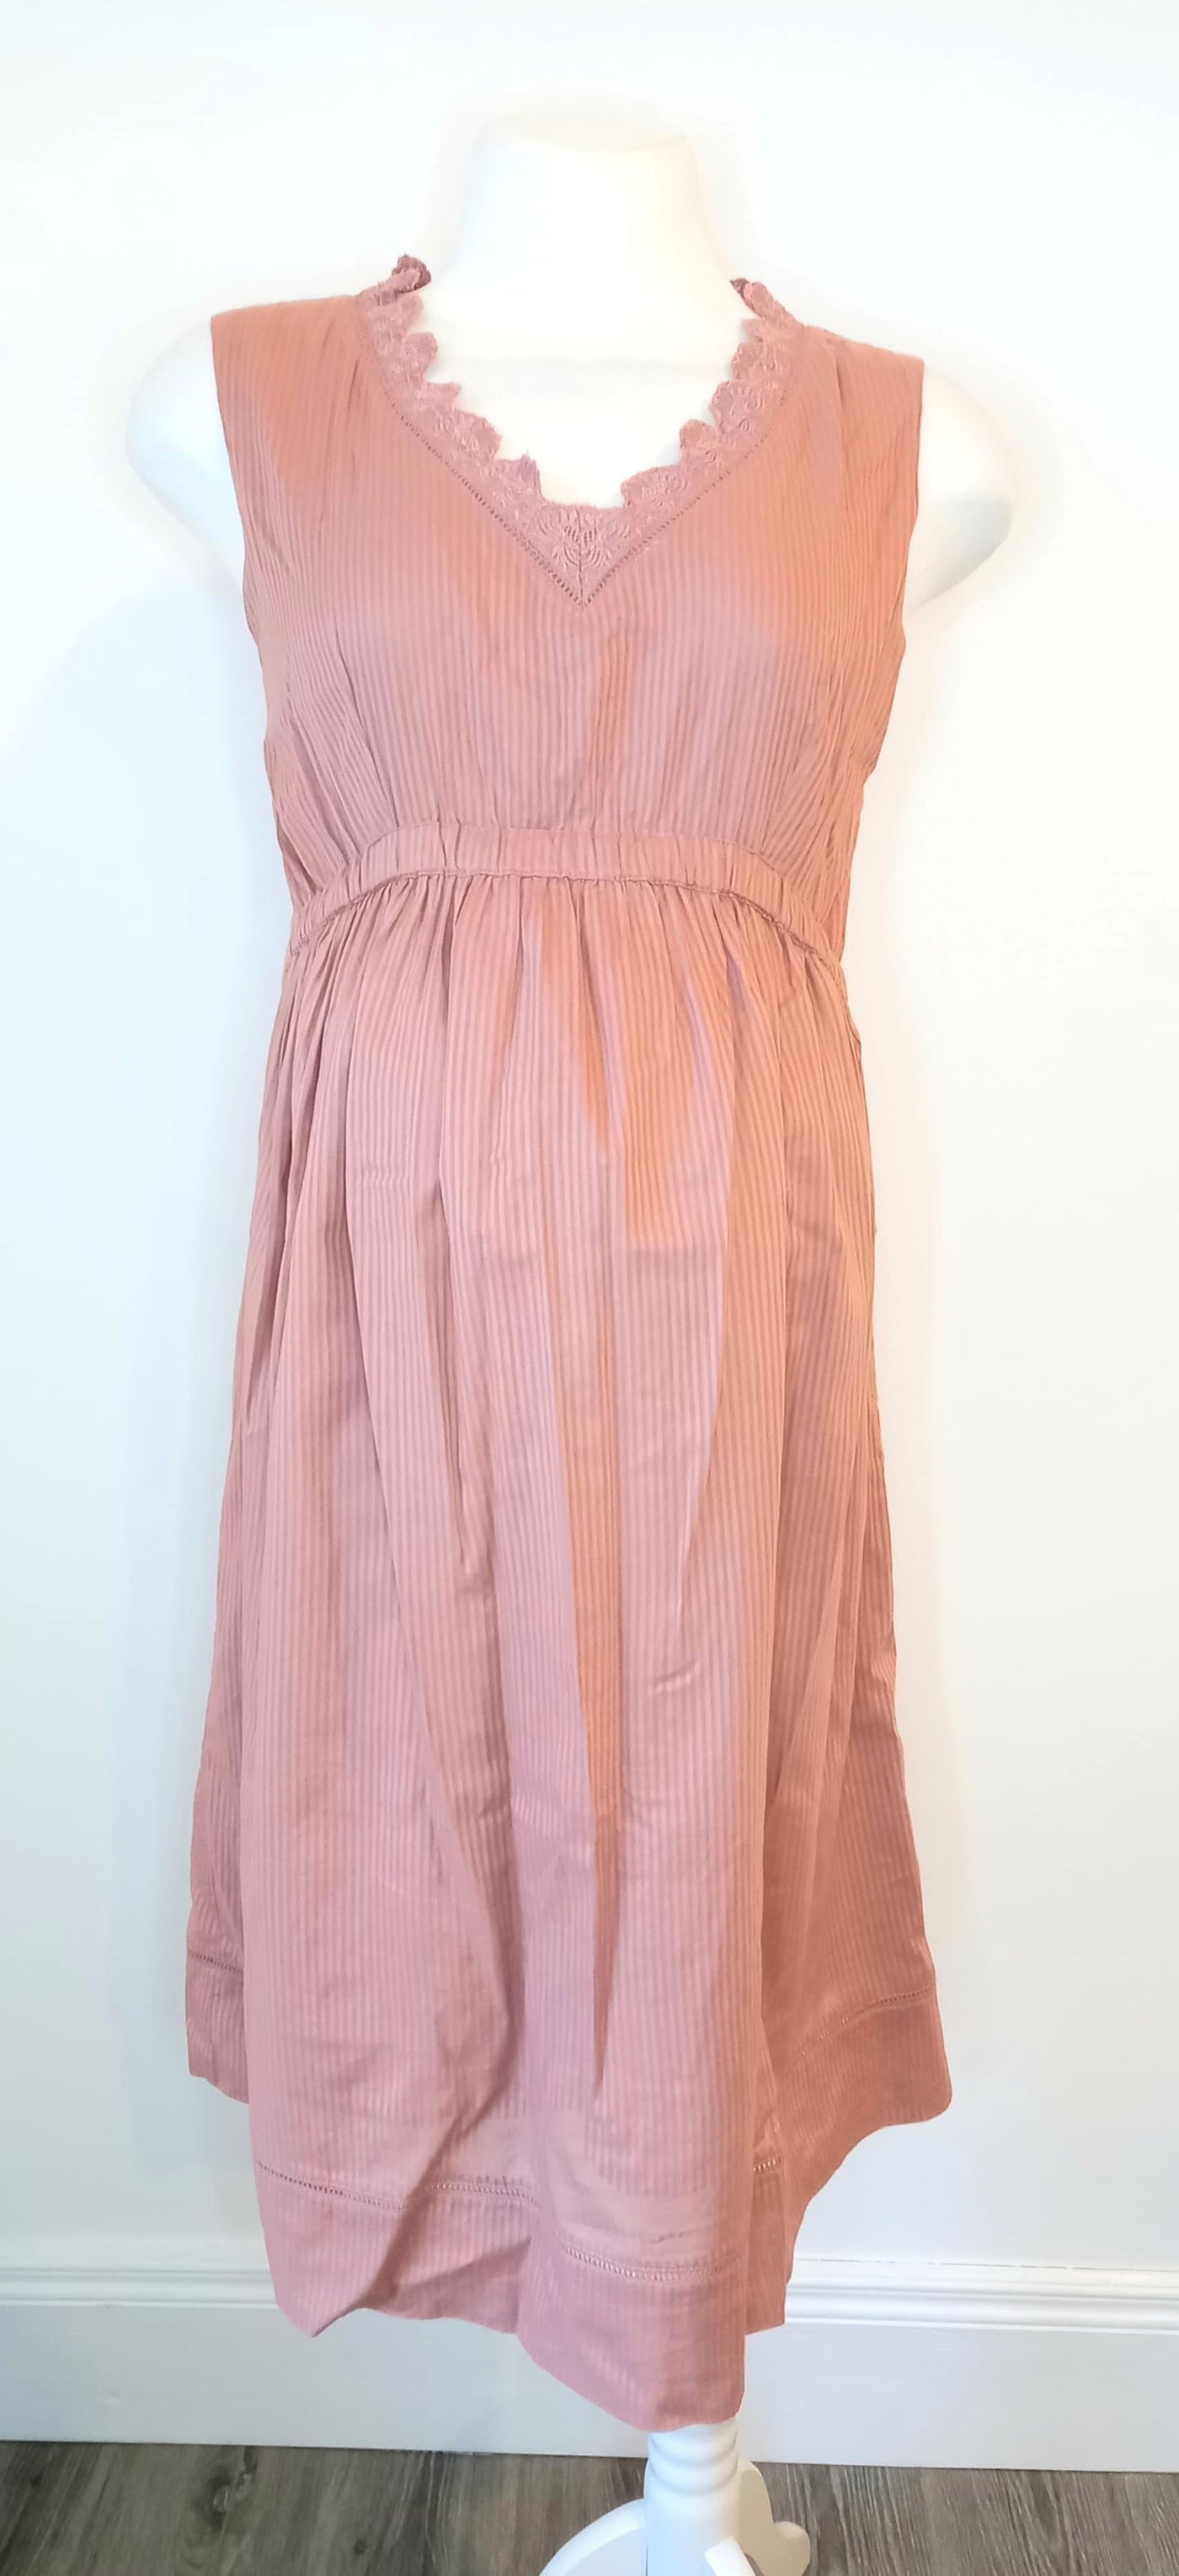 Colline Maternity Dusky Pink Sleeveless Dress - Size EUR 40 (Approx UK 12)